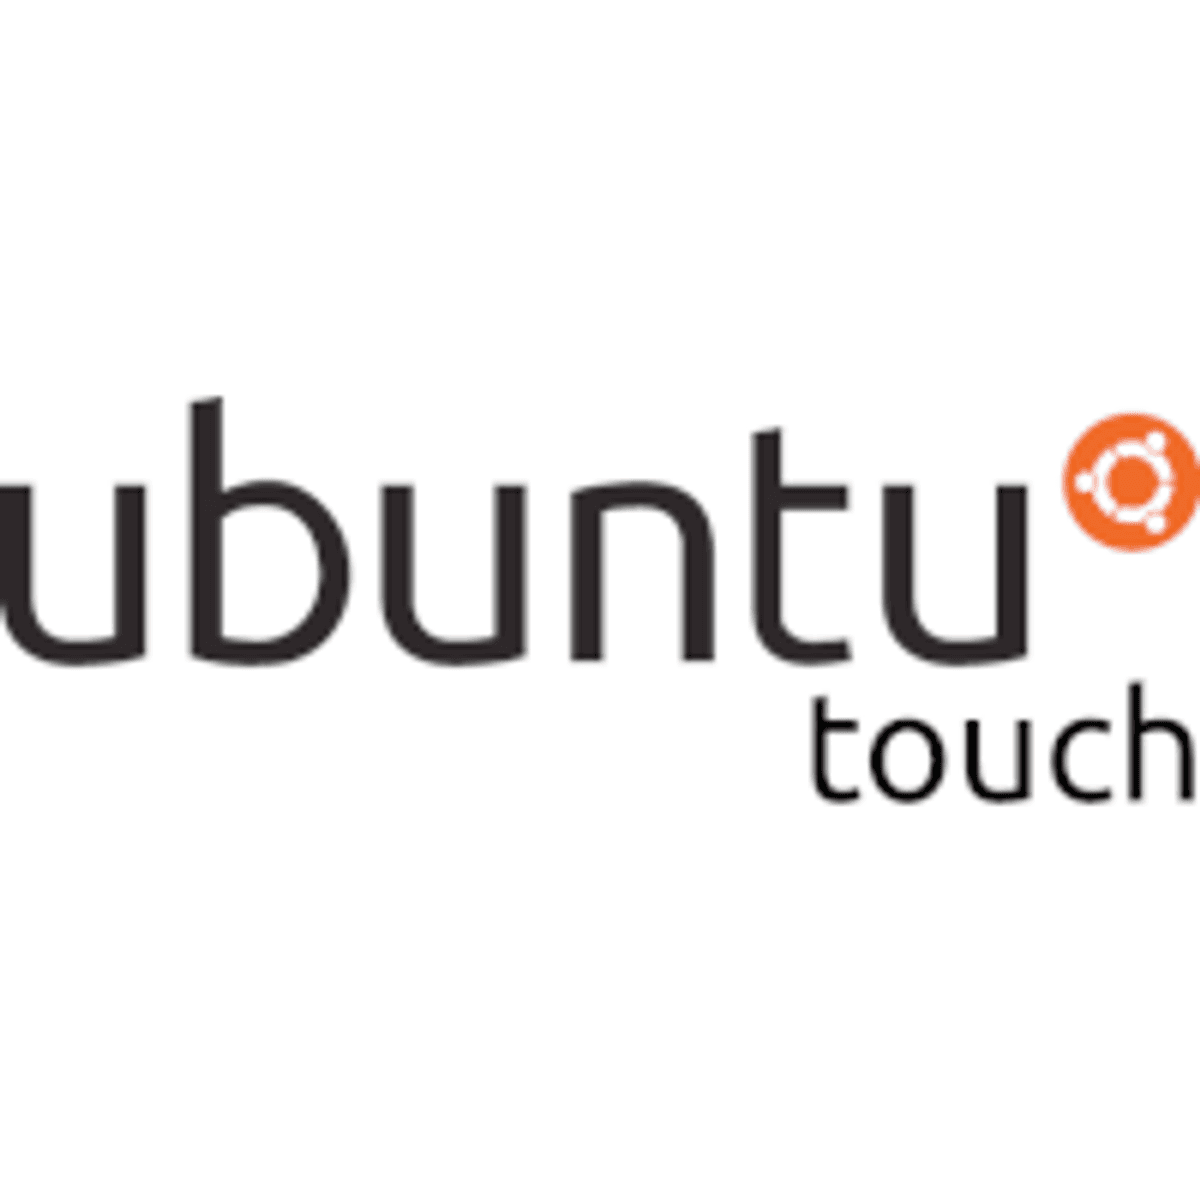 UBPorts Foundation meldt groeiende interesse in Ubuntu Touch voor smartphones image